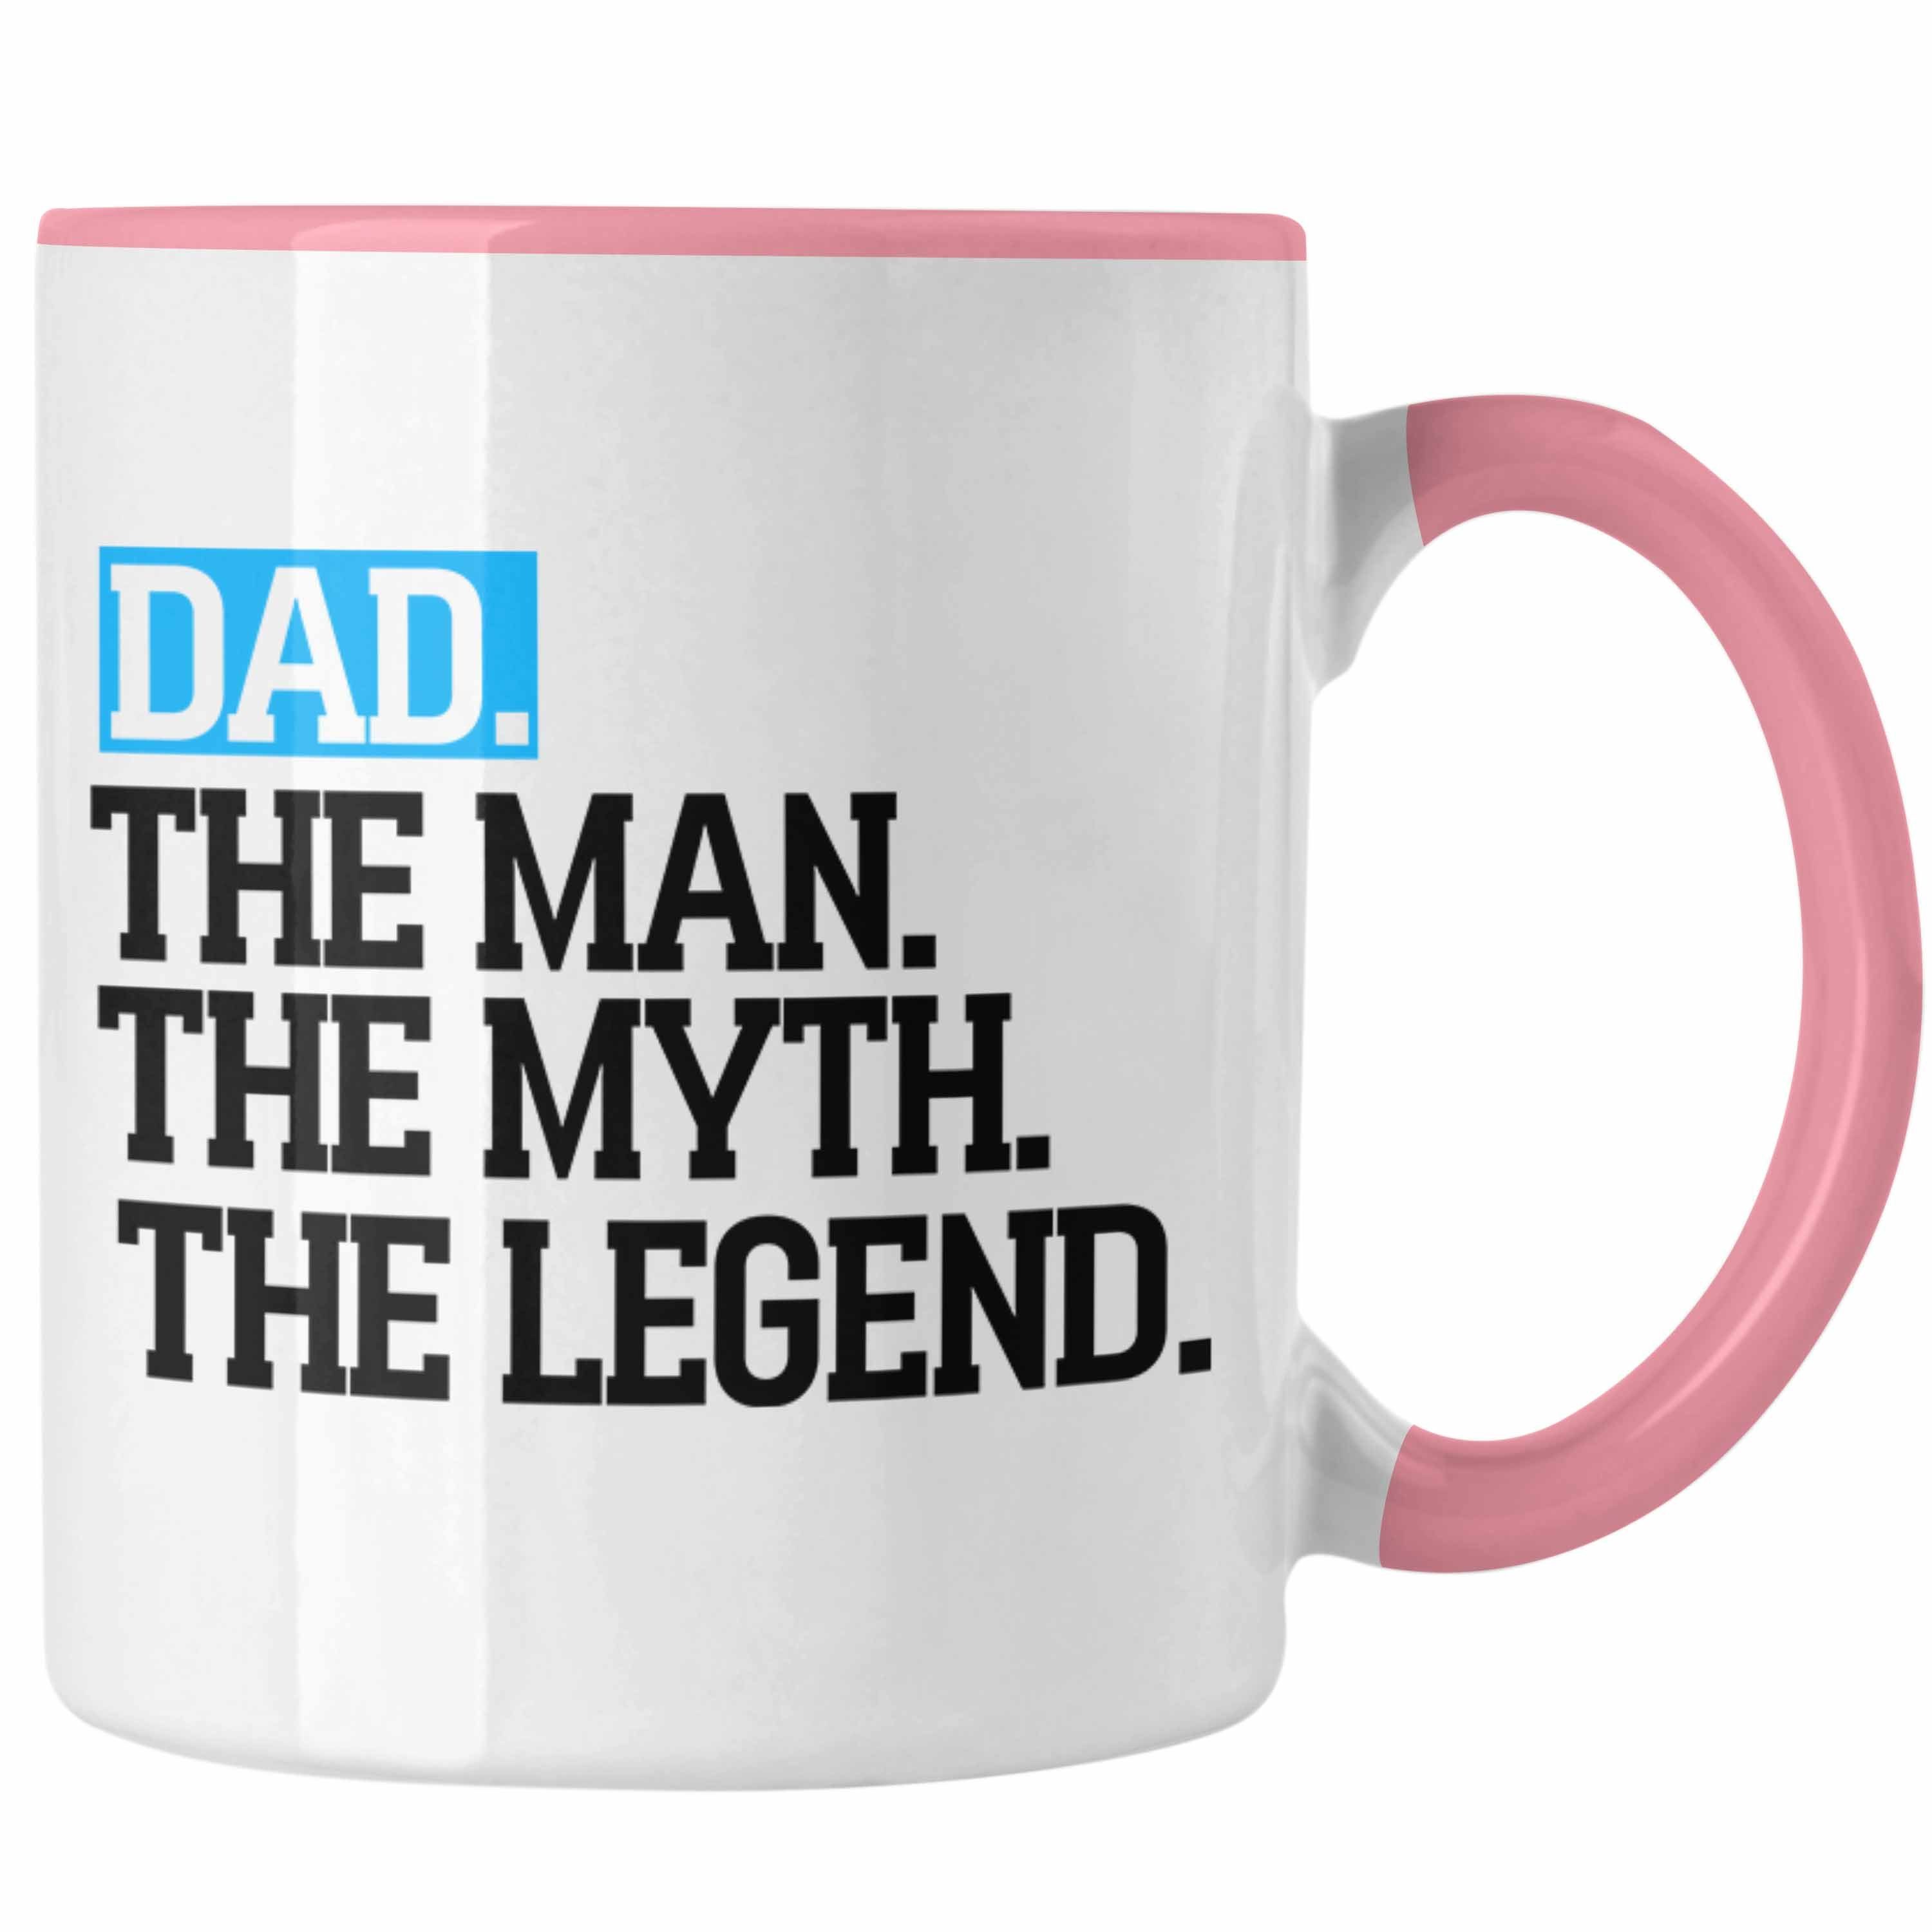 Trendation Tasse Tasse für Vater Lustig "Dad The Man The Myth The Legend" Vatertag Spru Rosa